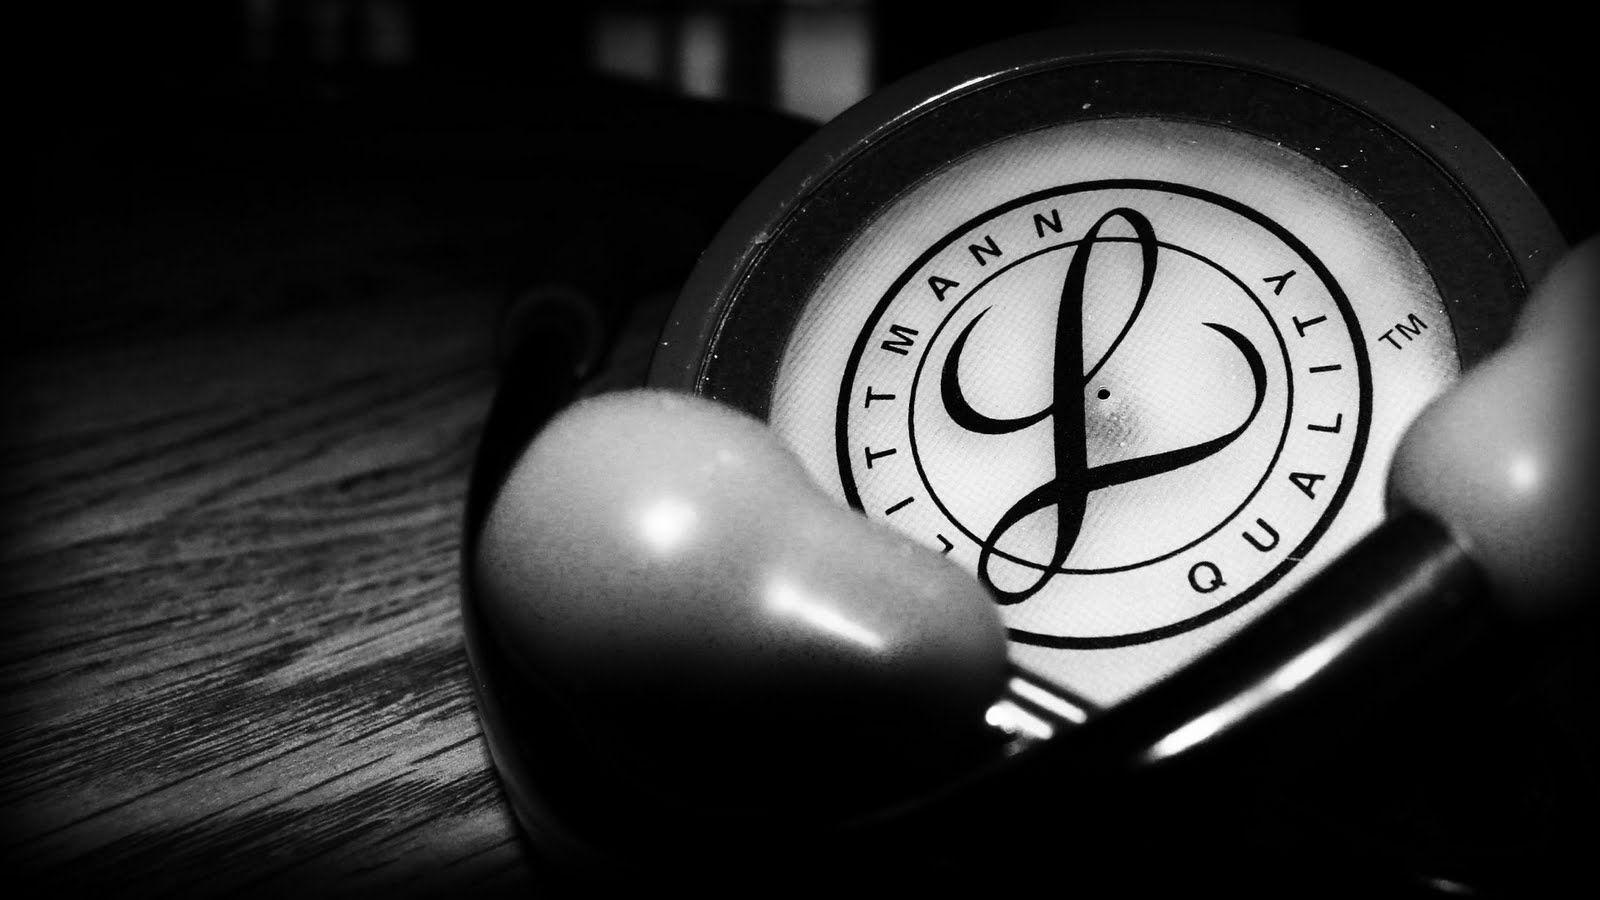 Stethoscope on Black Background Stock Photo by criscanton81 | PhotoDune